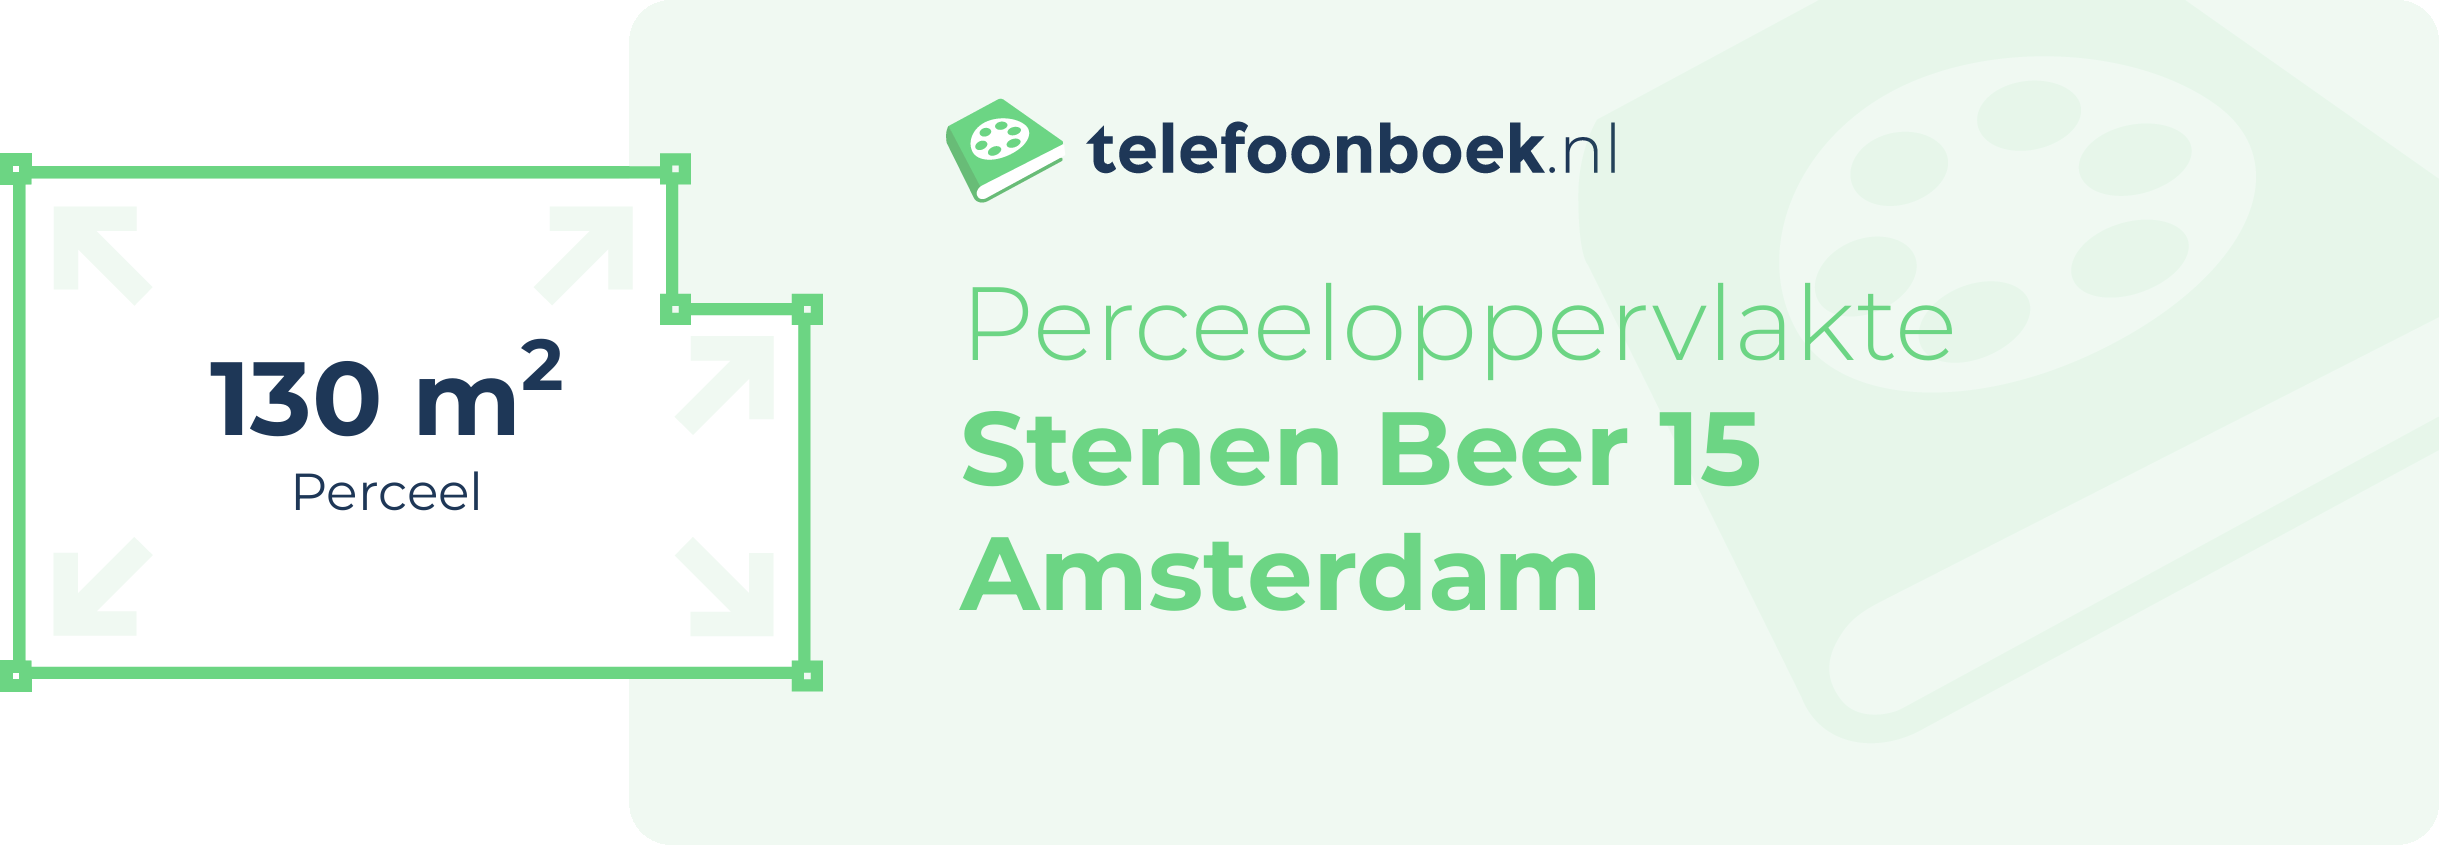 Perceeloppervlakte Stenen Beer 15 Amsterdam